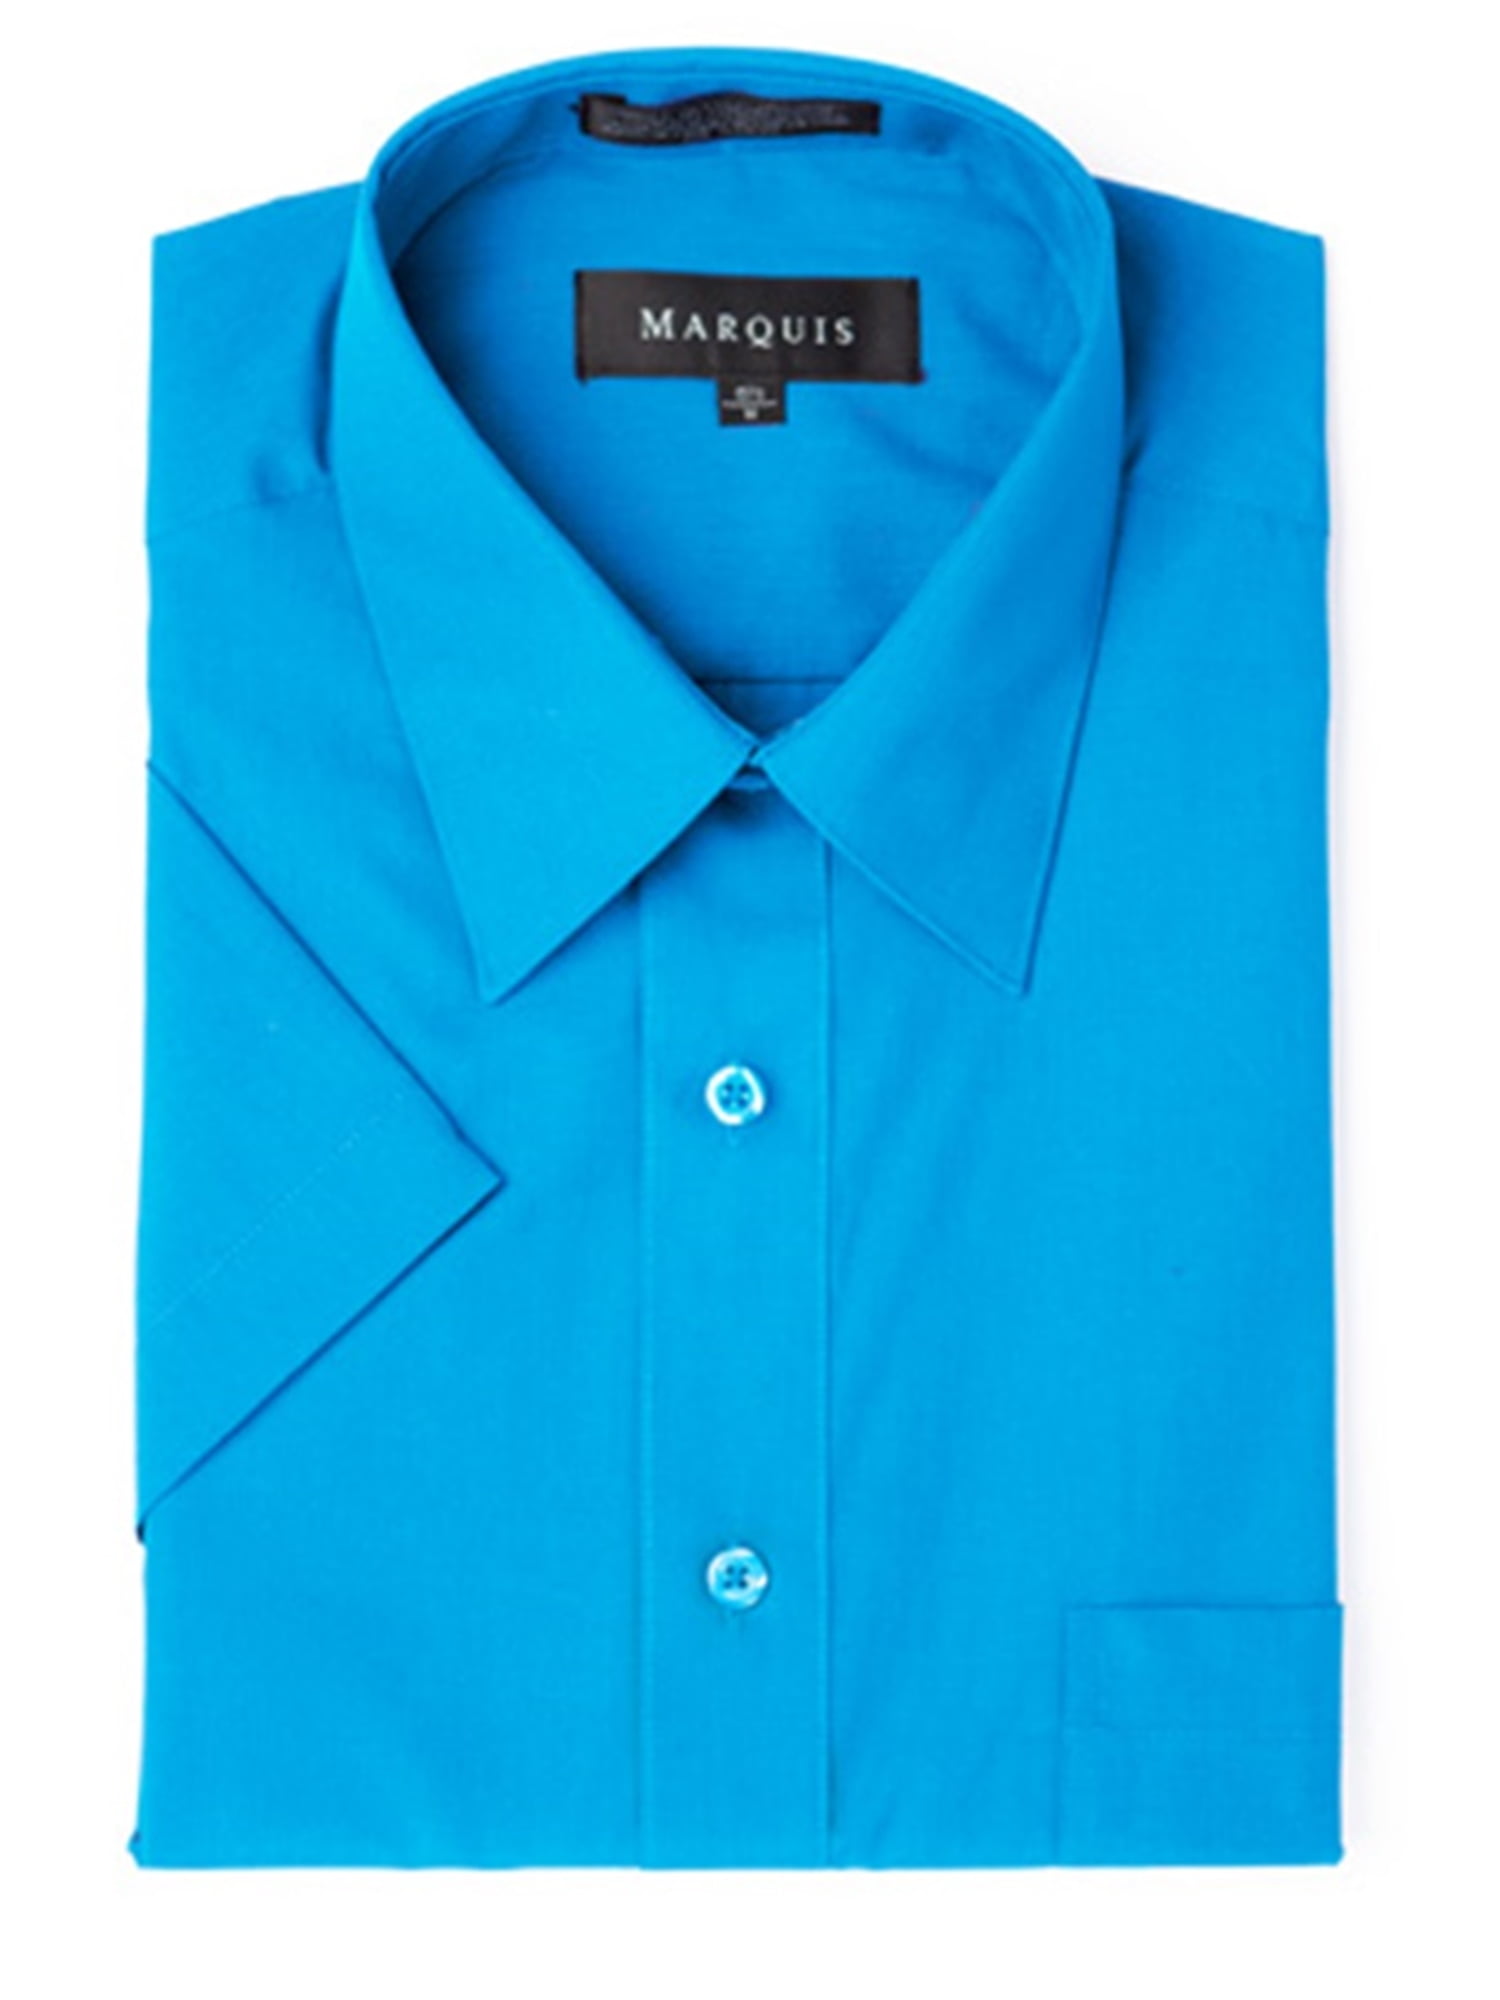 Marquis Mens Classic Fit Solid Light Blue Cotton Blend Dress Shirt 